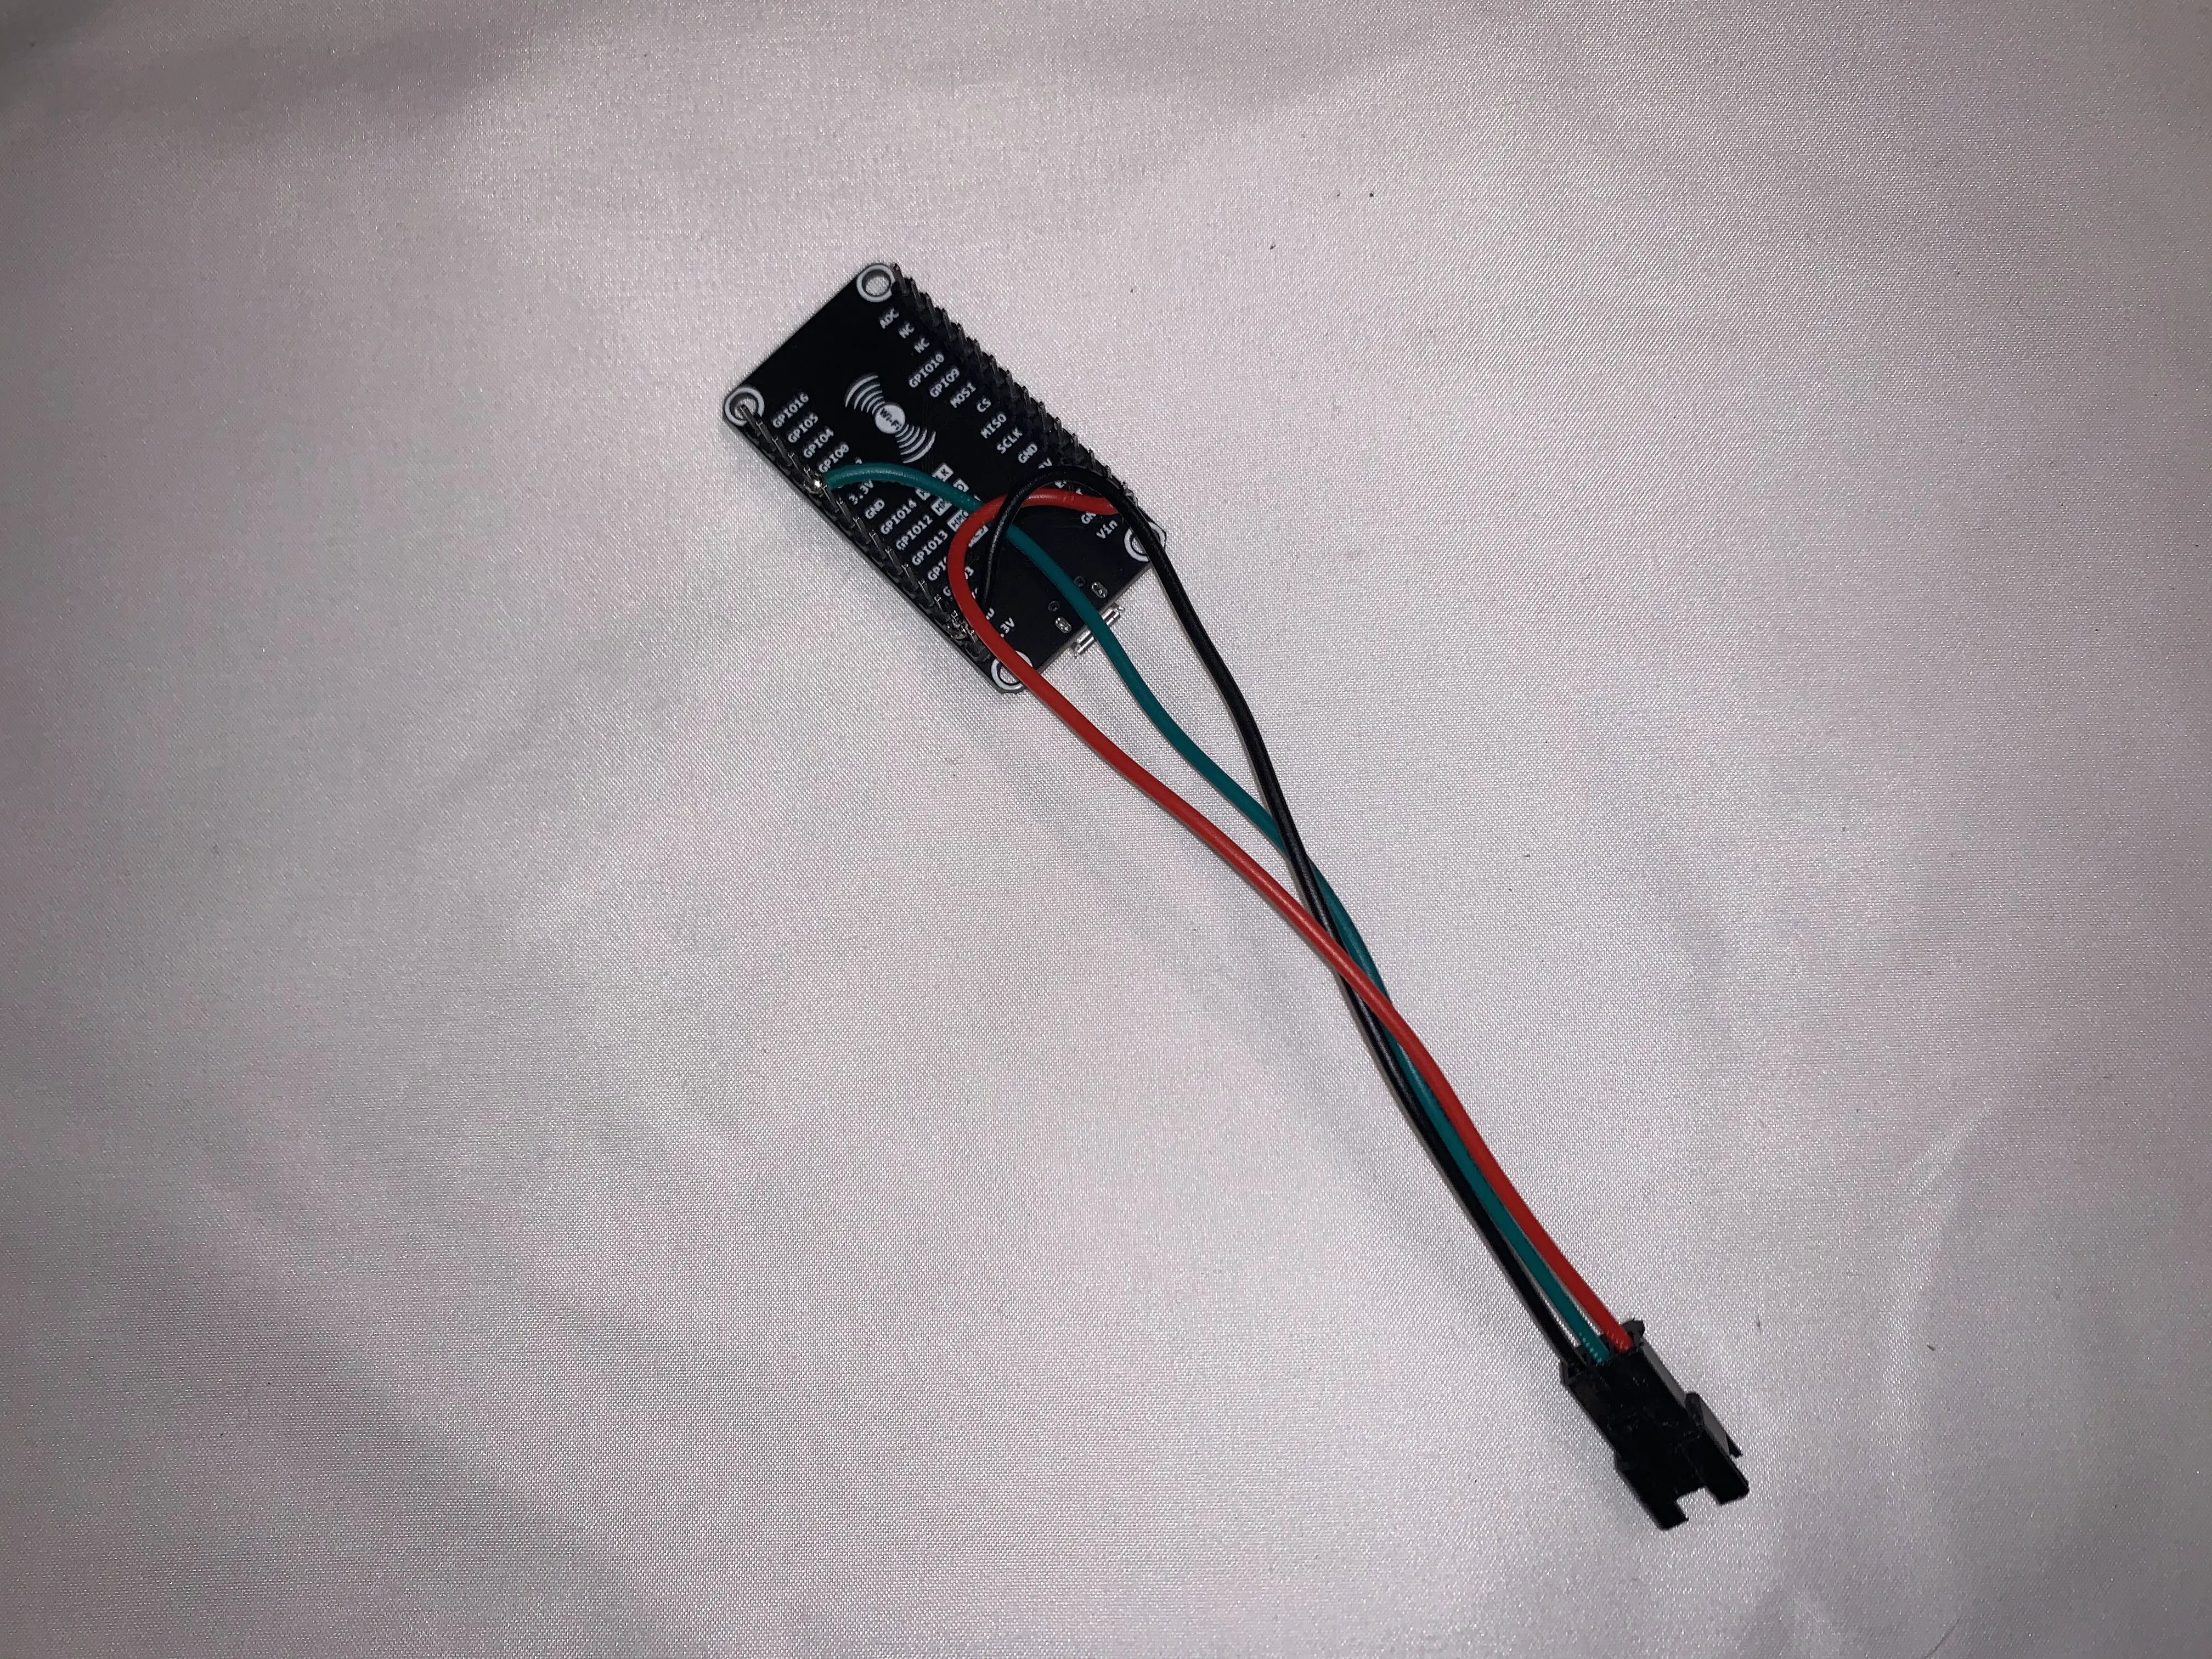 Wires soldered to ESP8266 pins